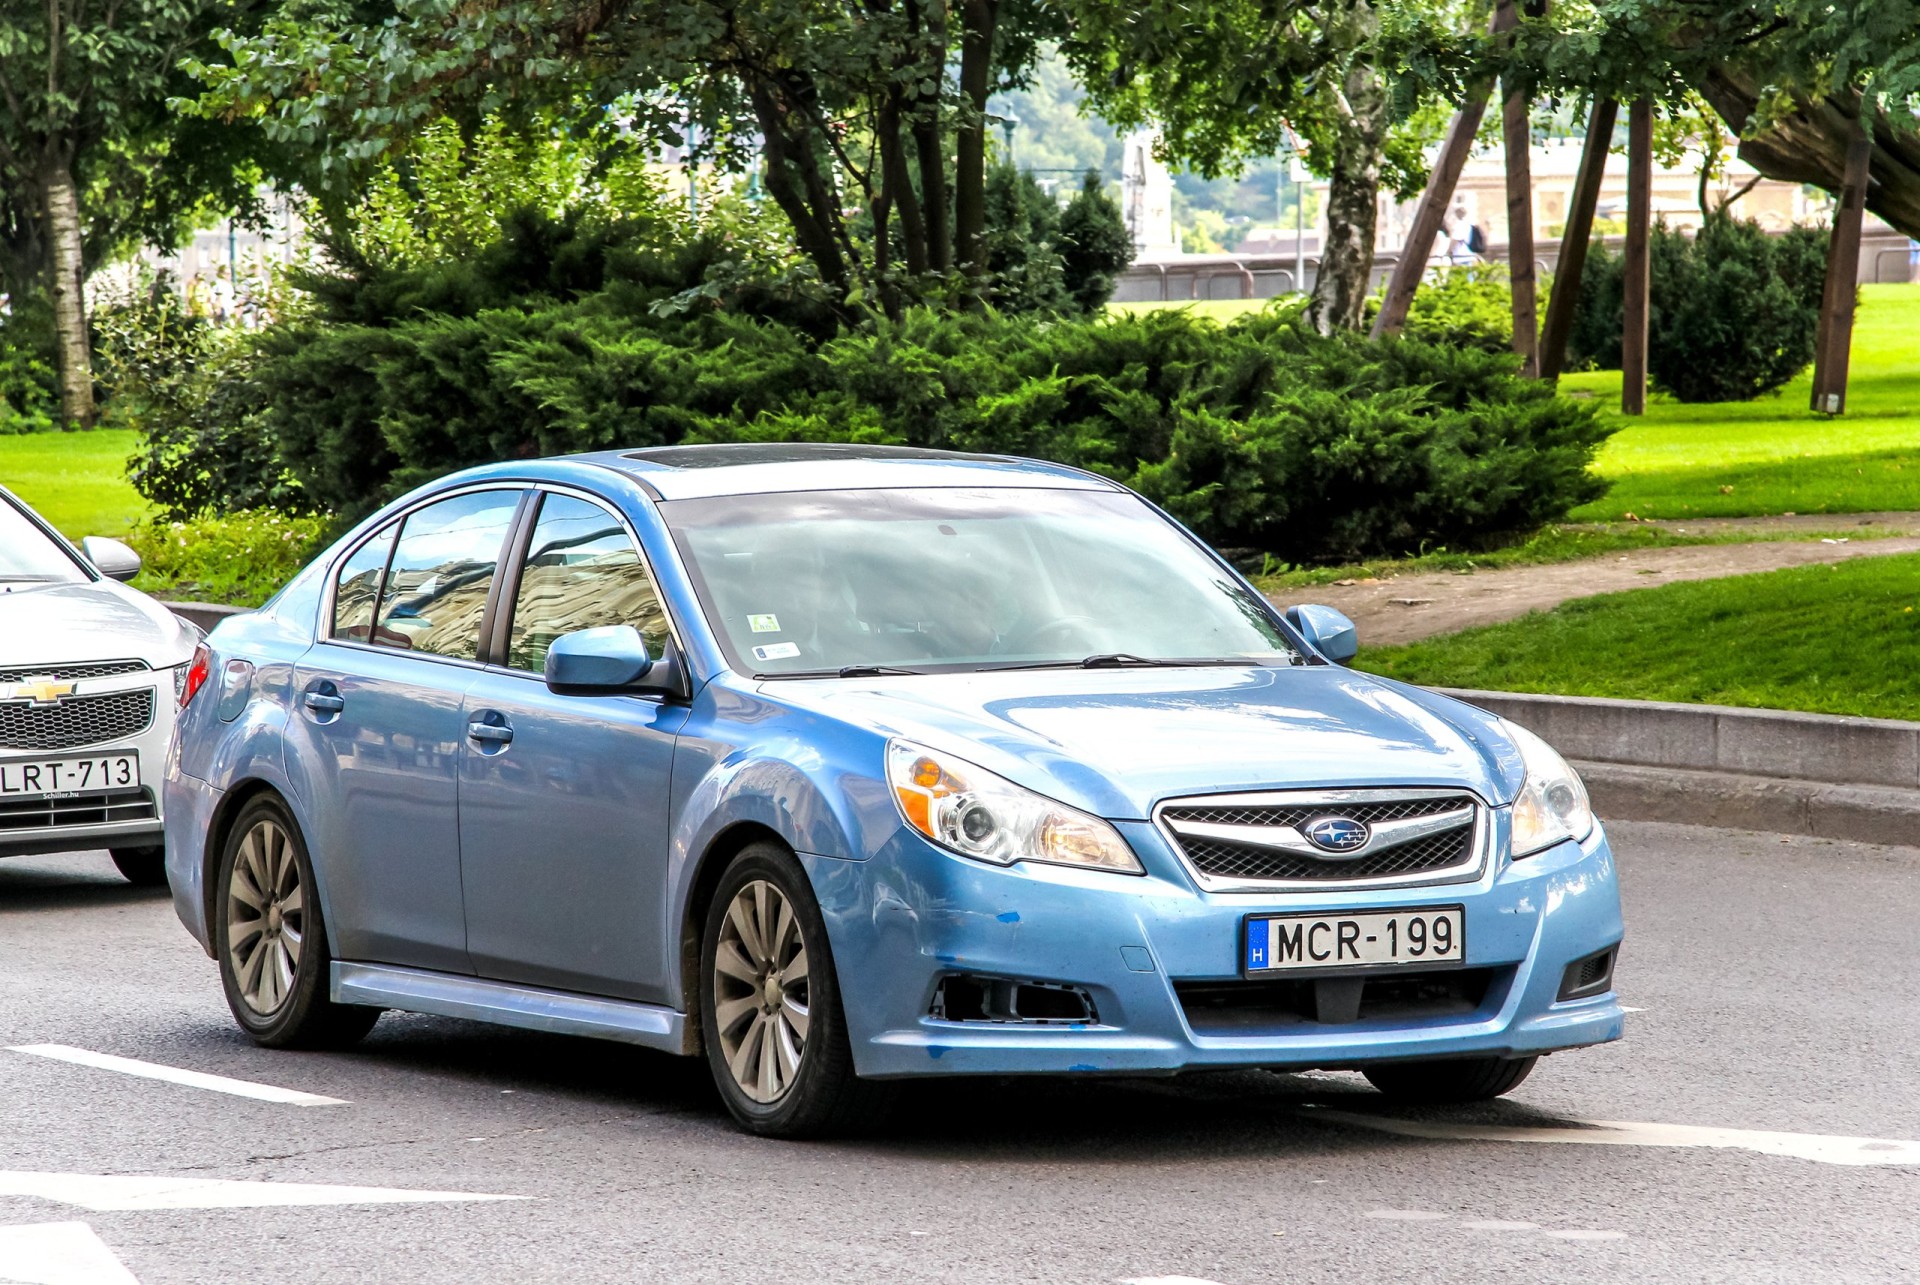 2012 Subaru Legacy in the city street.